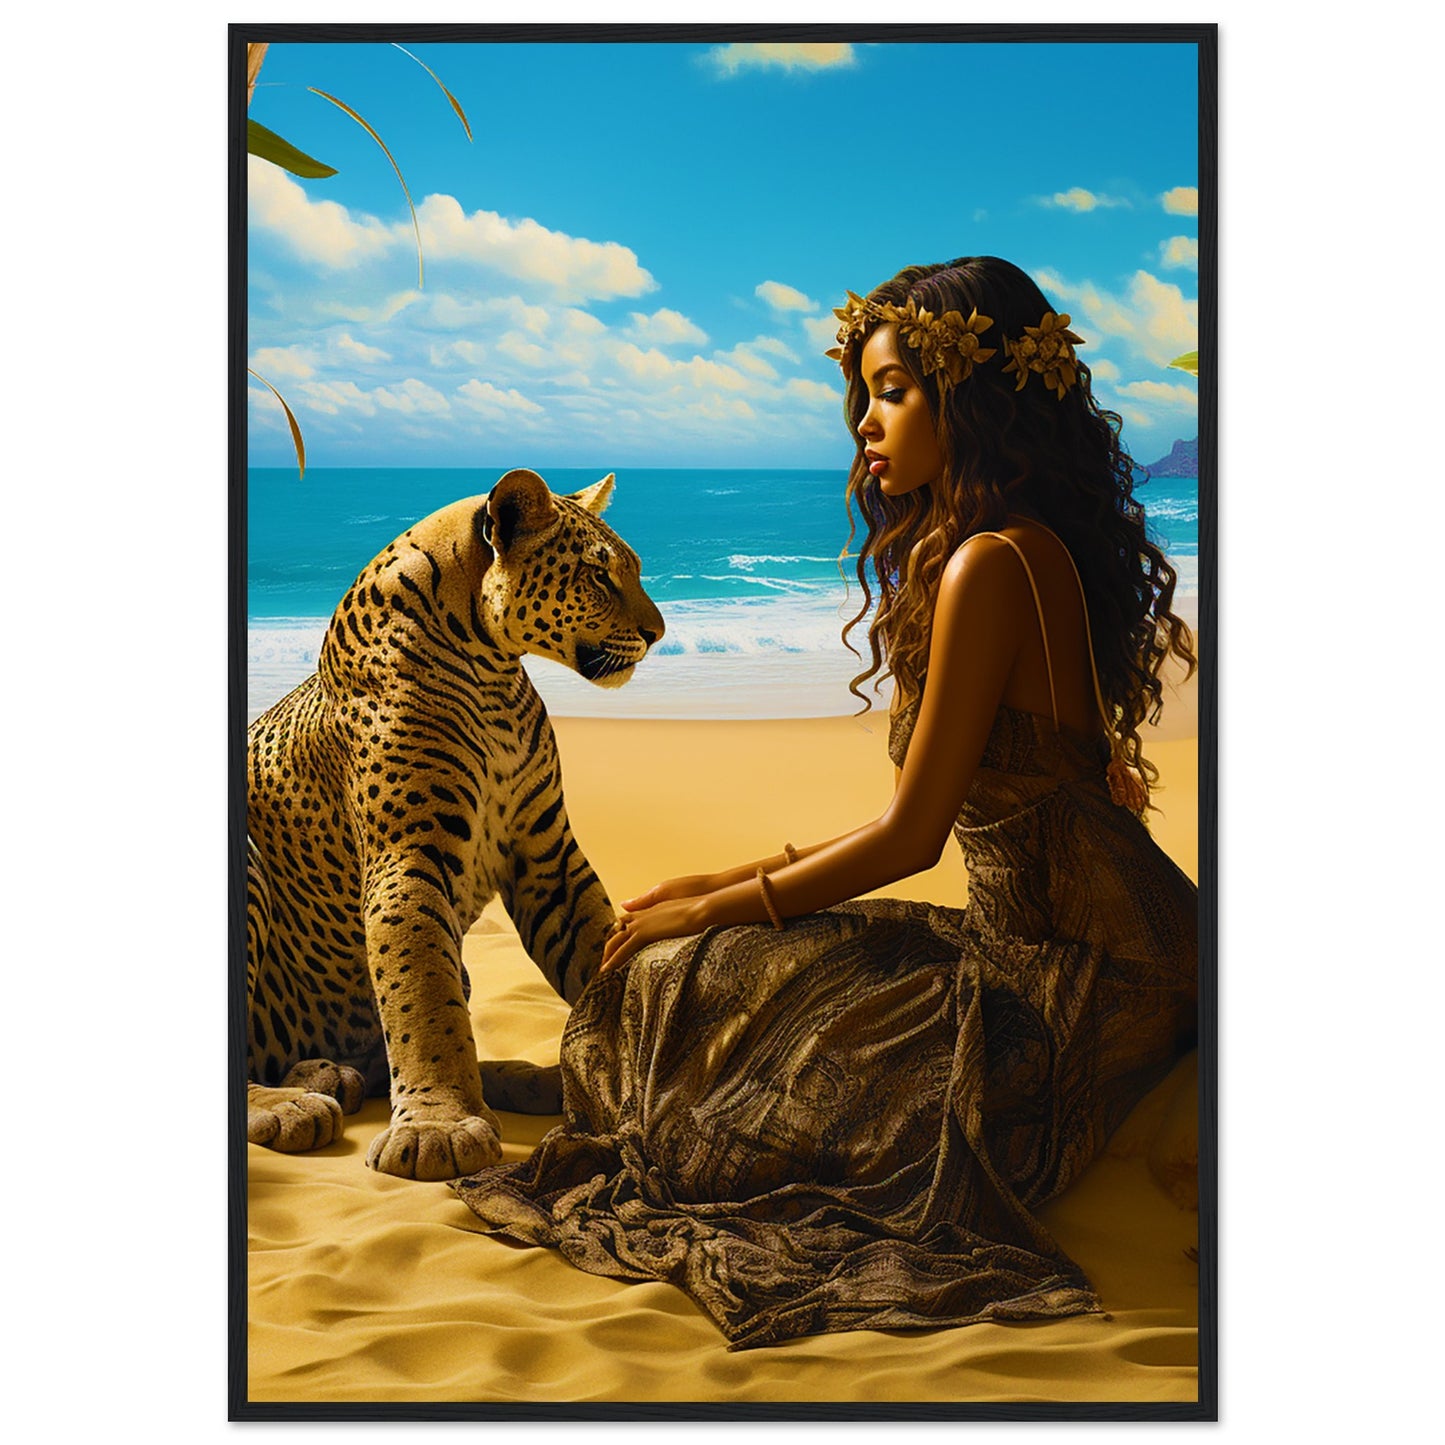 Seychelle Serenity: Golden Sand The Maiden and the LeopardPremium Matte Paper Wooden Framed Poster